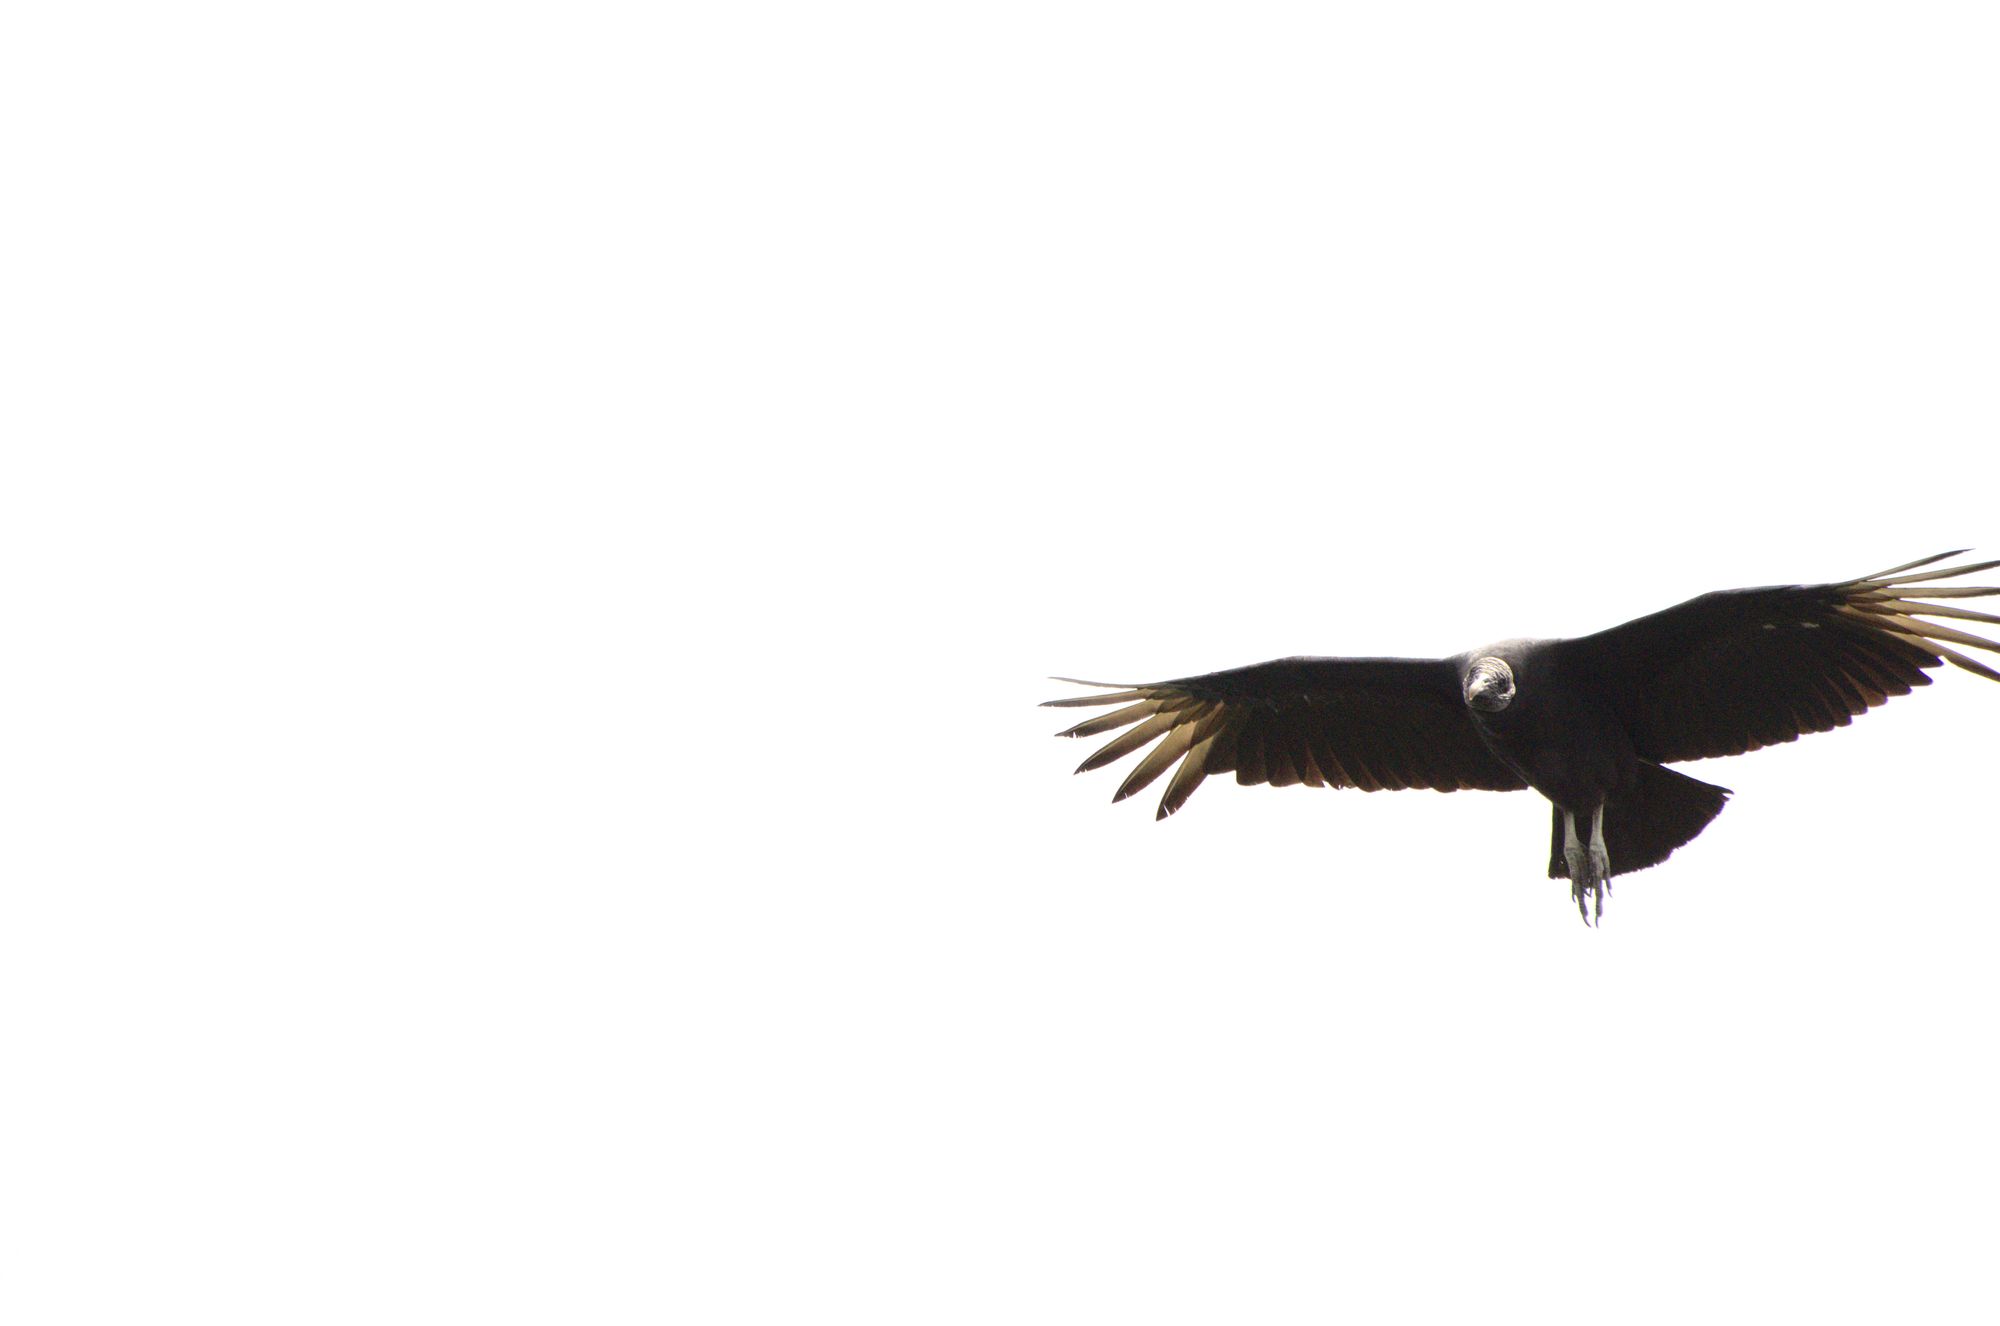 Black vulture in flight by Luis Alejandro Bernal Romero, Flickr